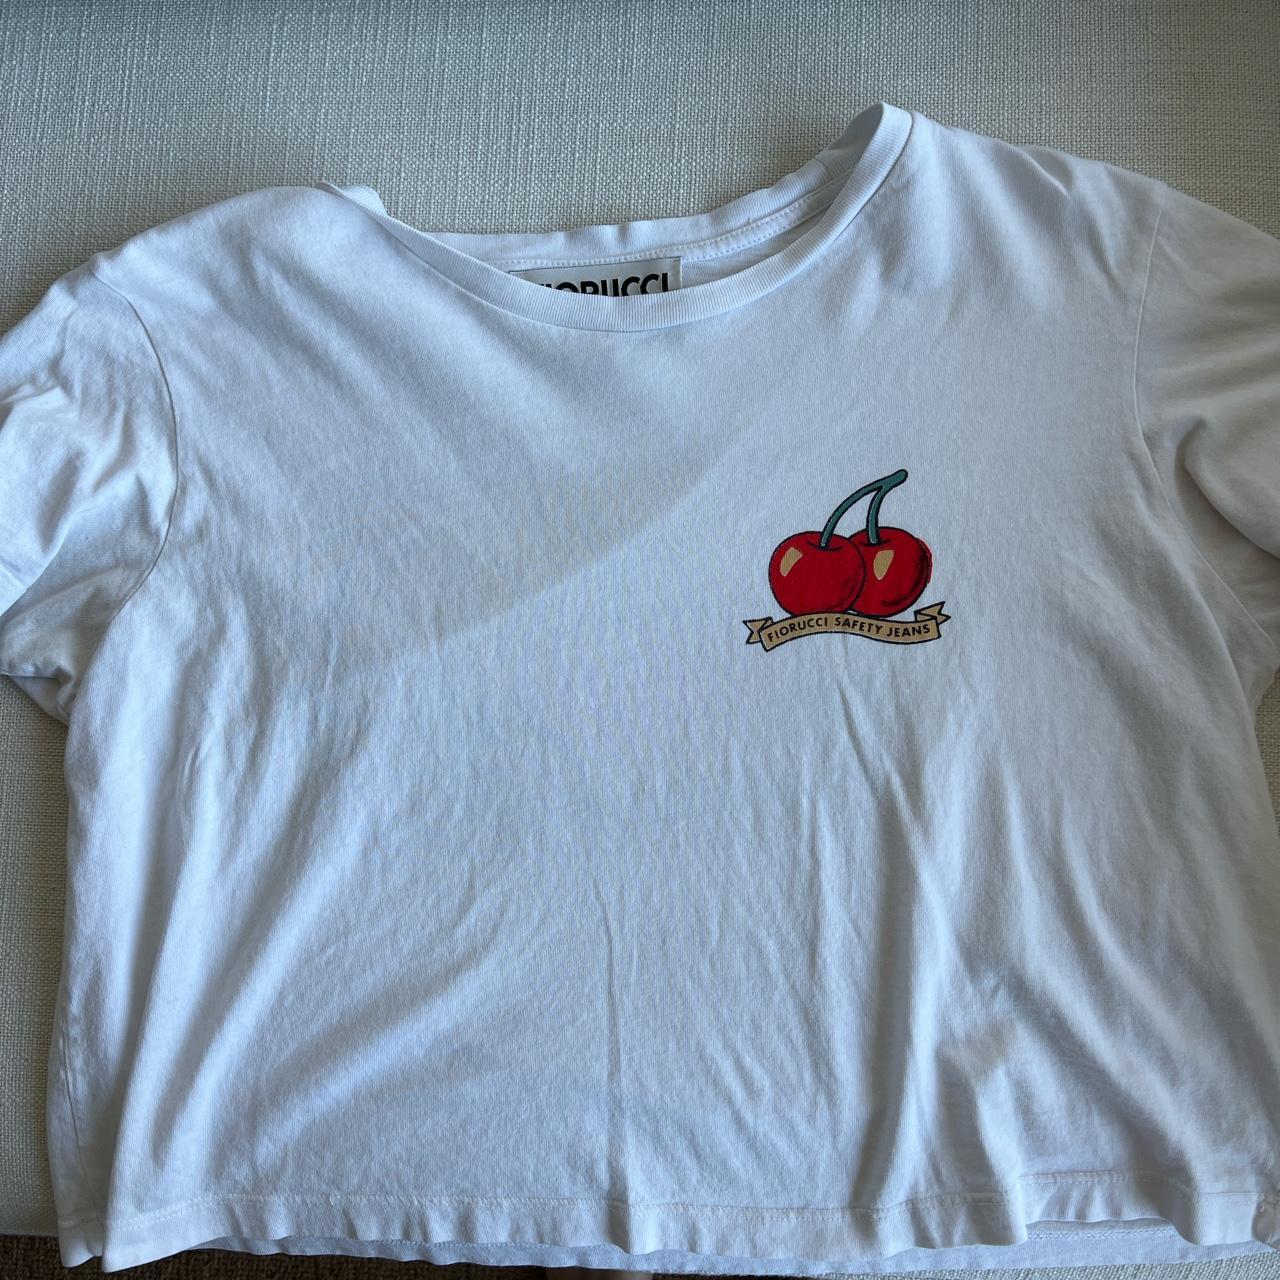 Fiorucci Women's White T-shirt